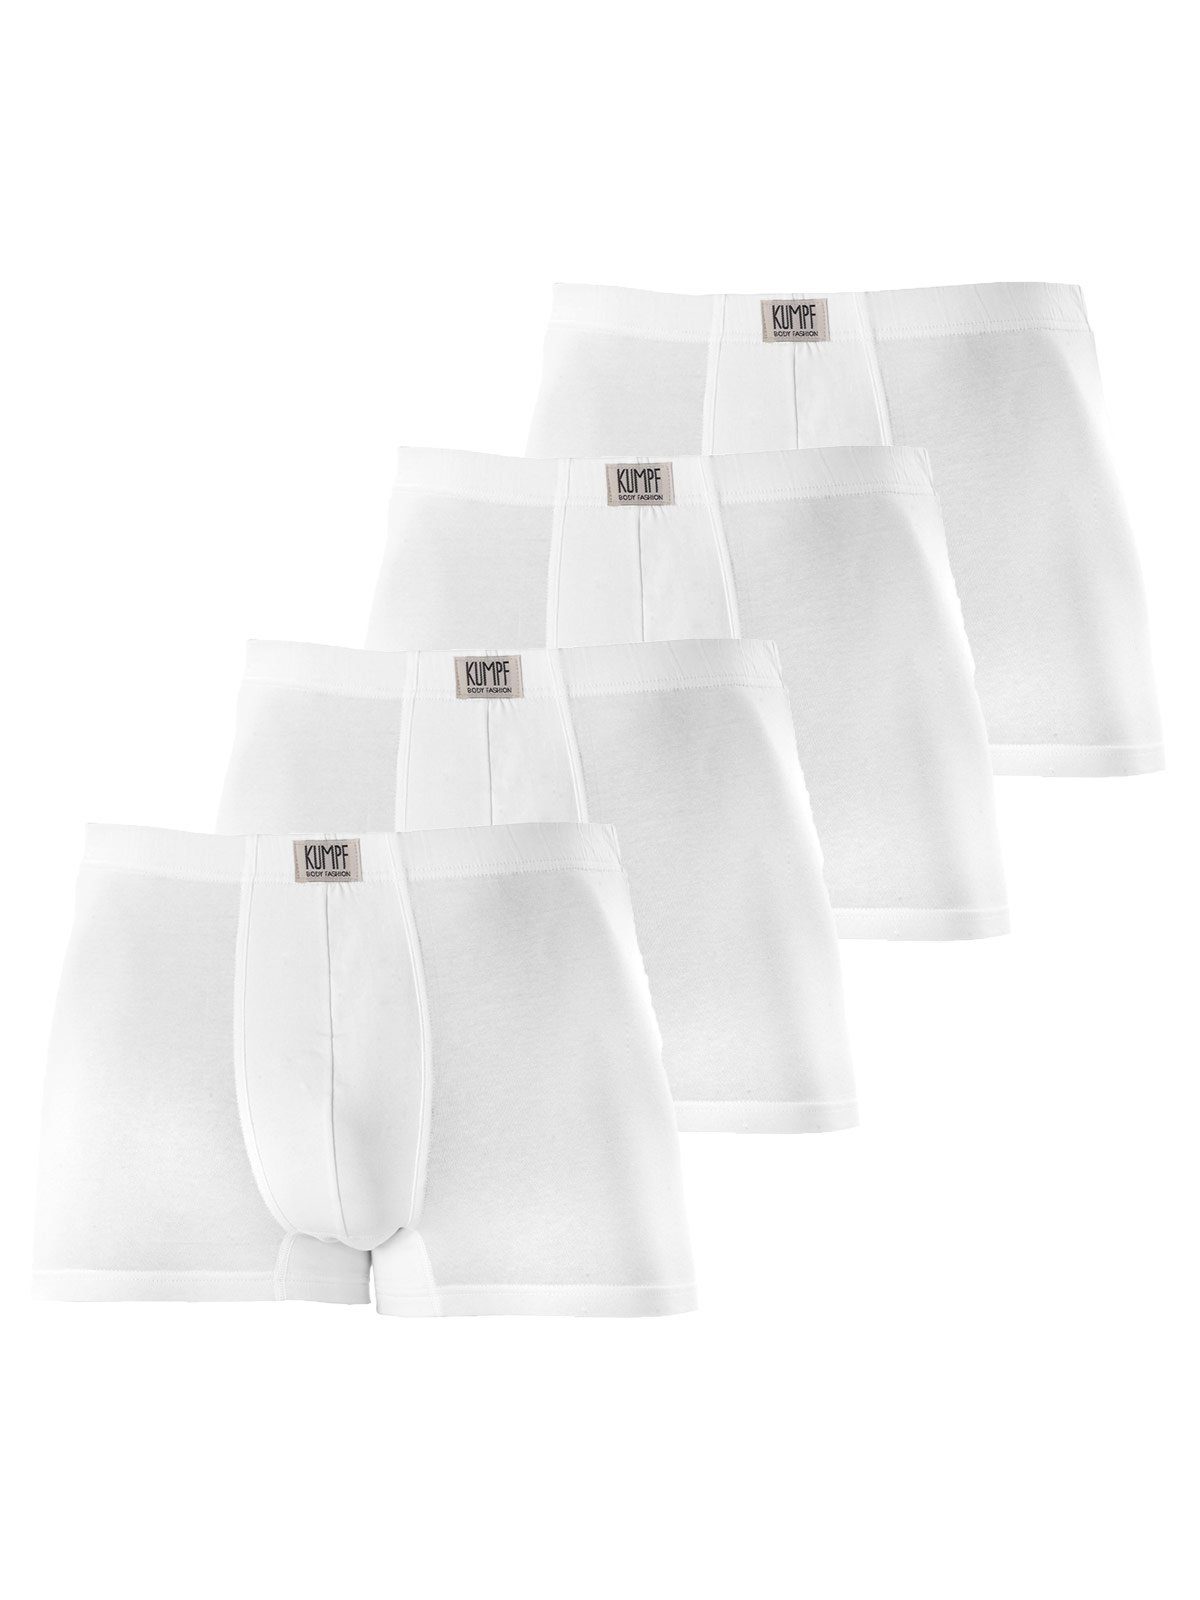 Cotton Retro Pants Herren 4er KUMPF 4-St) Markenqualität hohe weiss Pants Sparpack (Spar-Set, Bio